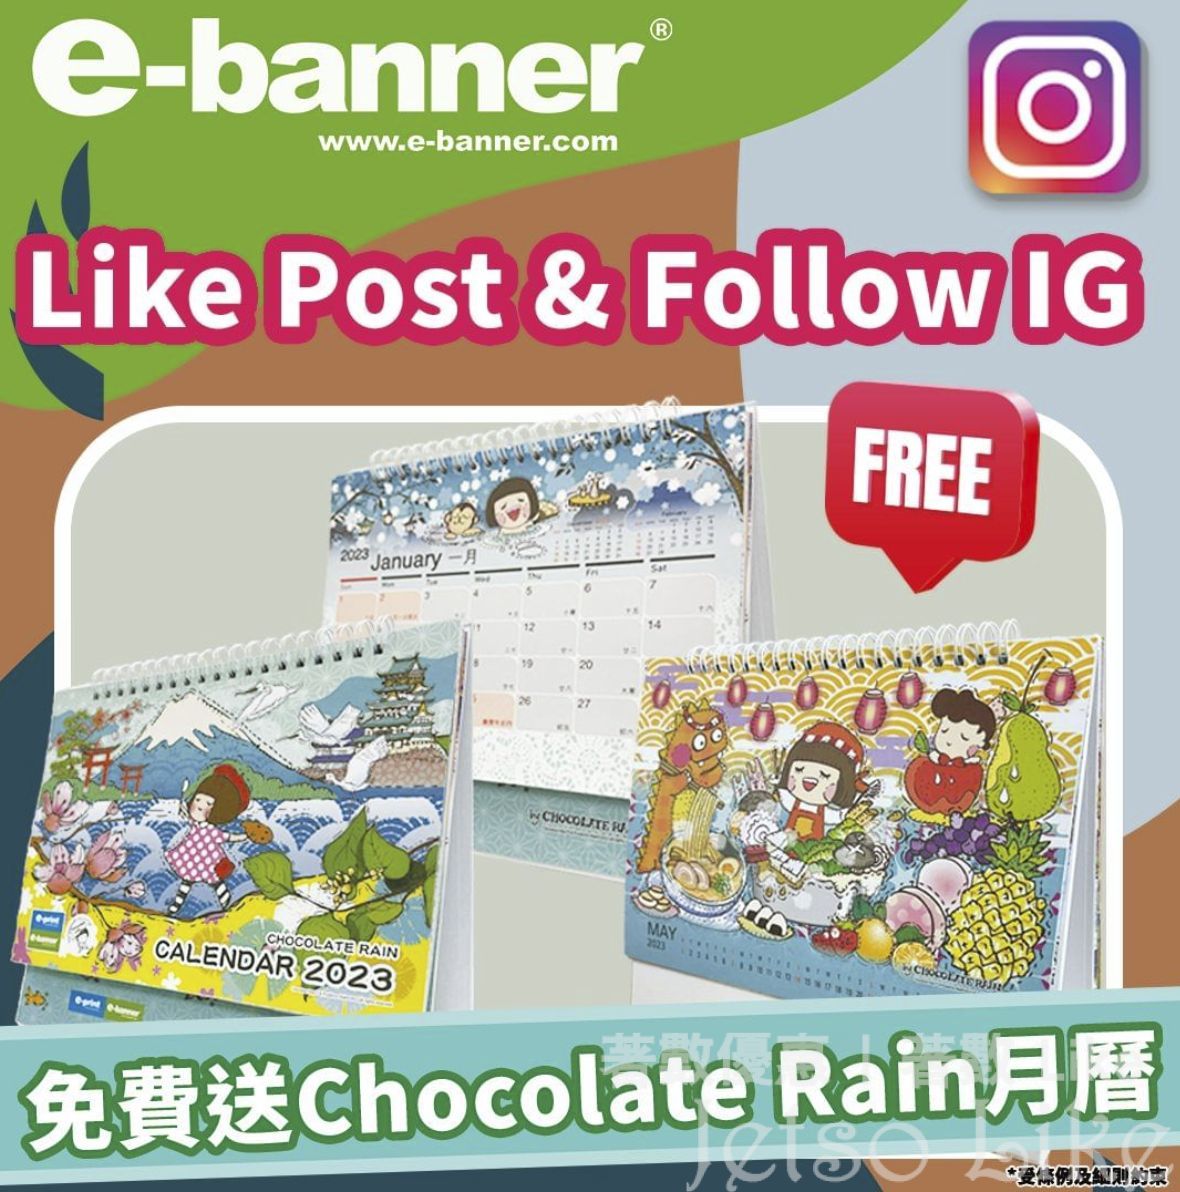 e-banner 免費換領 Chocolate Rain座檯月曆